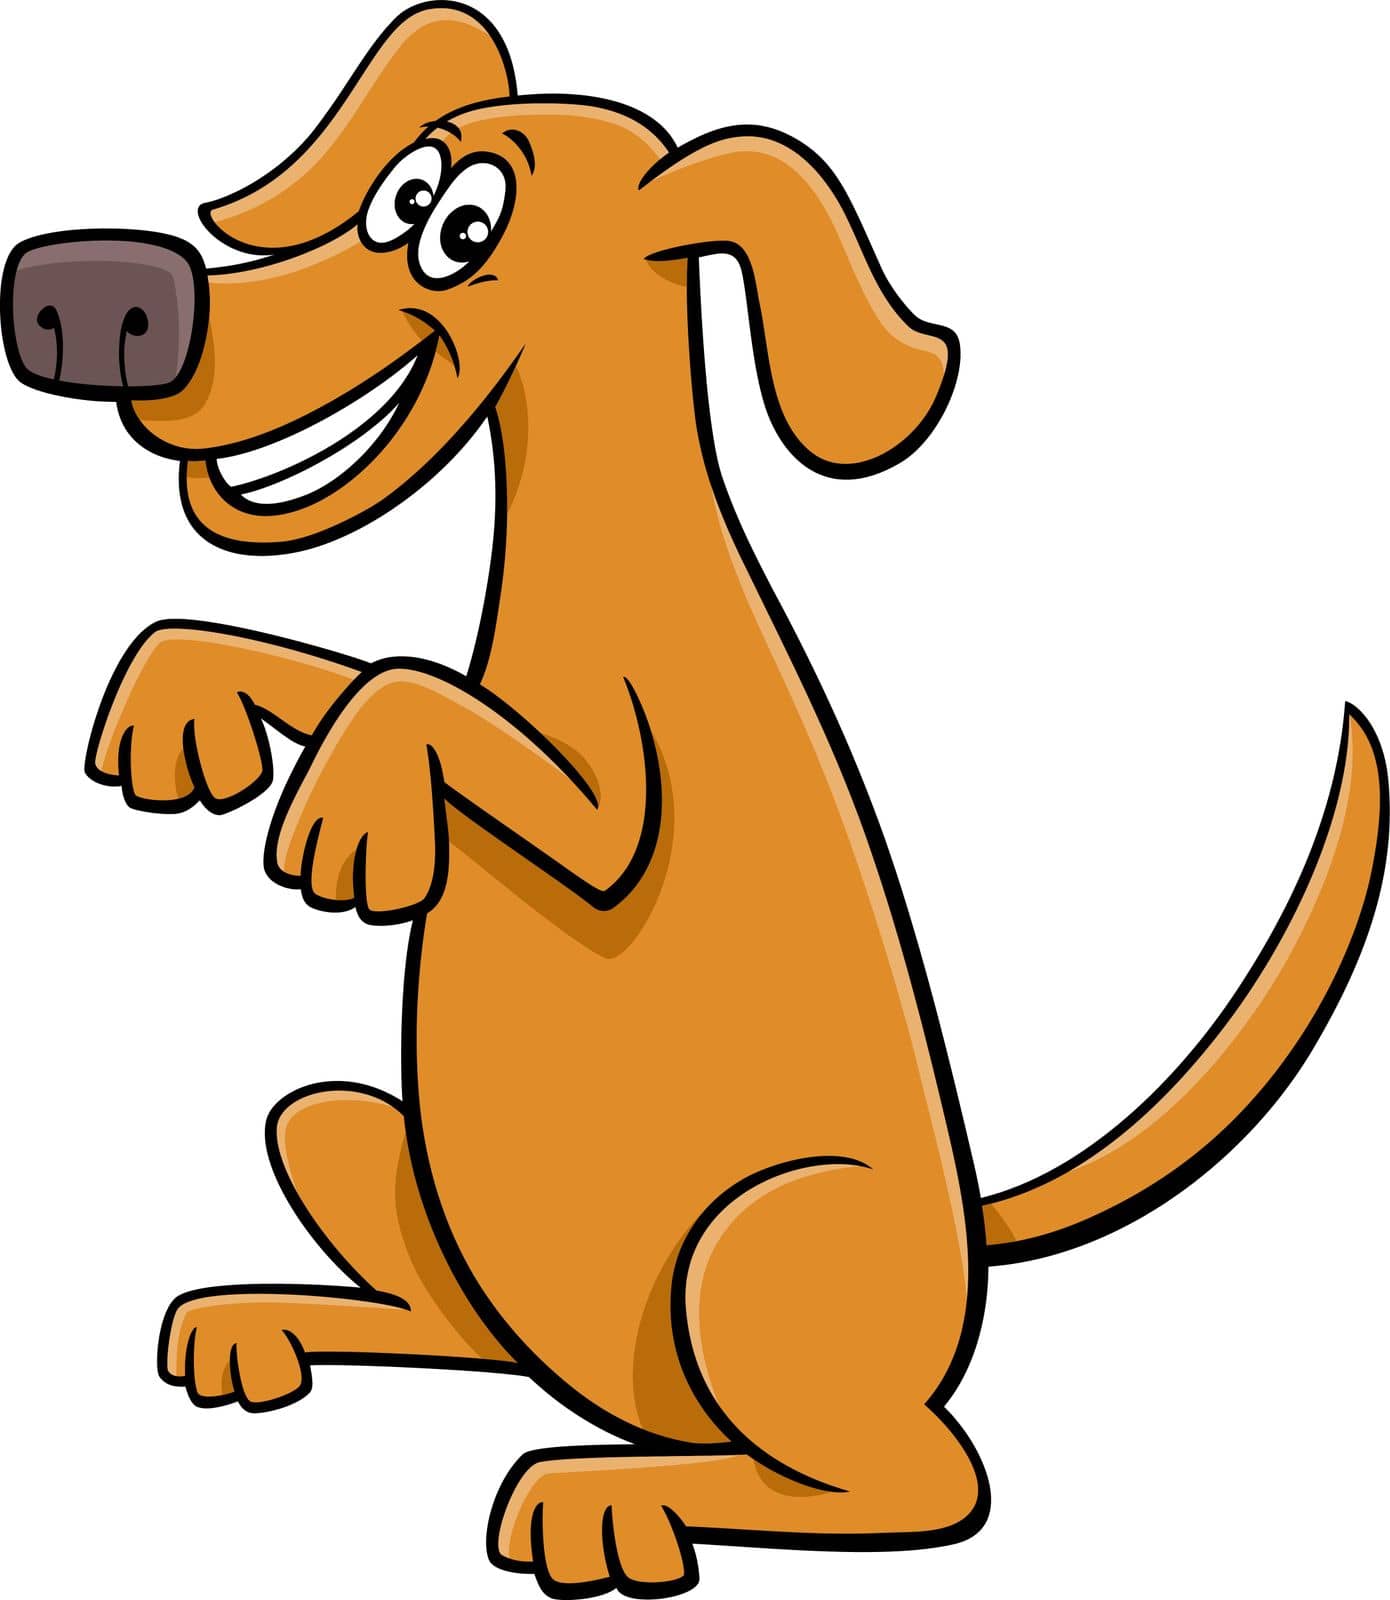 Cartoon illustration of playful dog animal character doing a trick